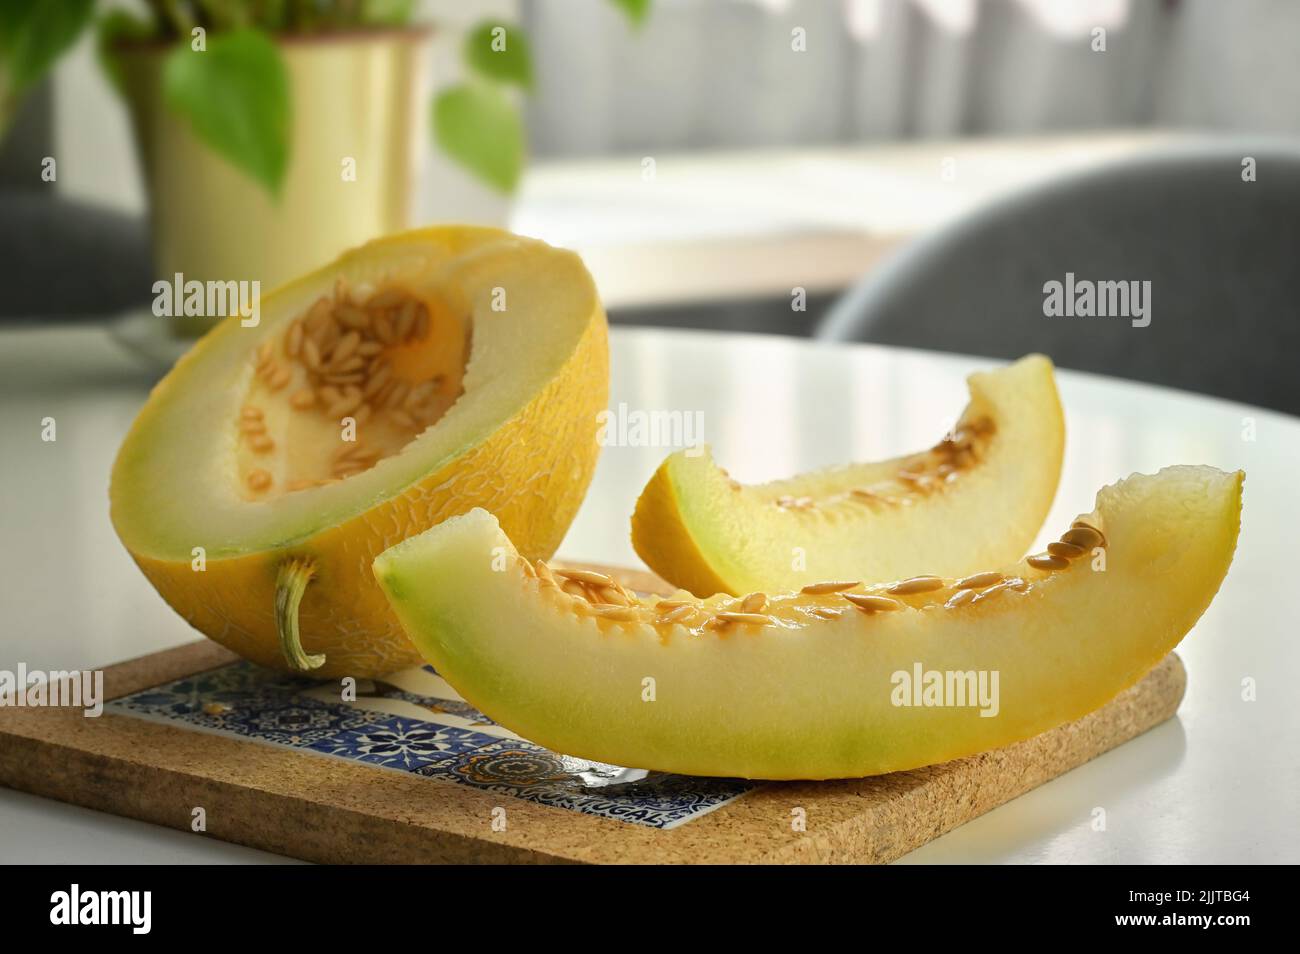 Closeup Sliced Ripe Yellow Melon on Table Stock Photo